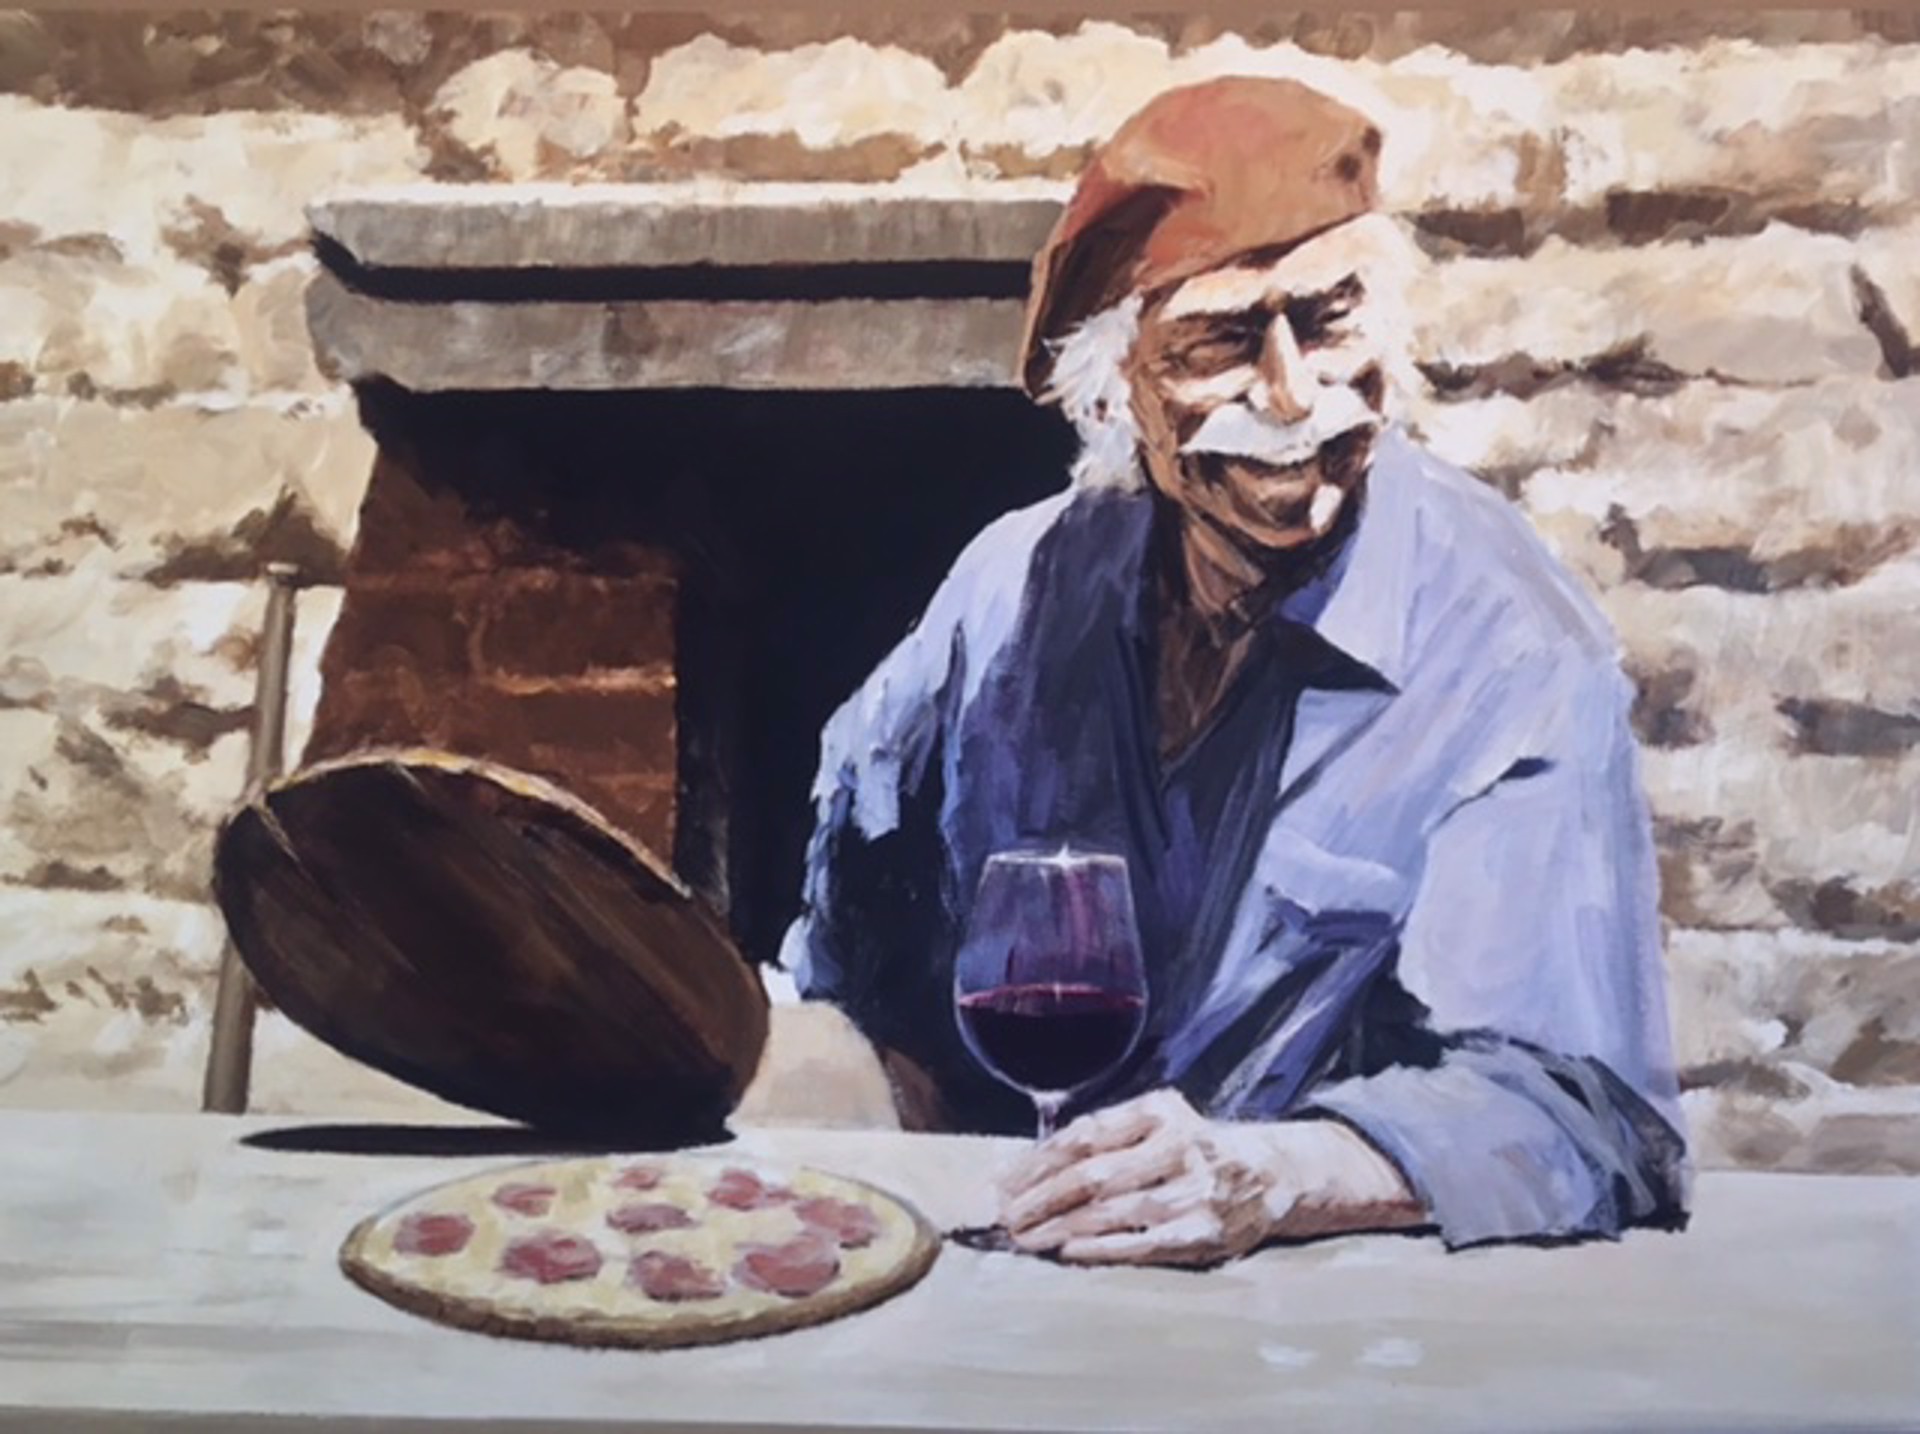 Pizza Alfresco by Aldo Luongo